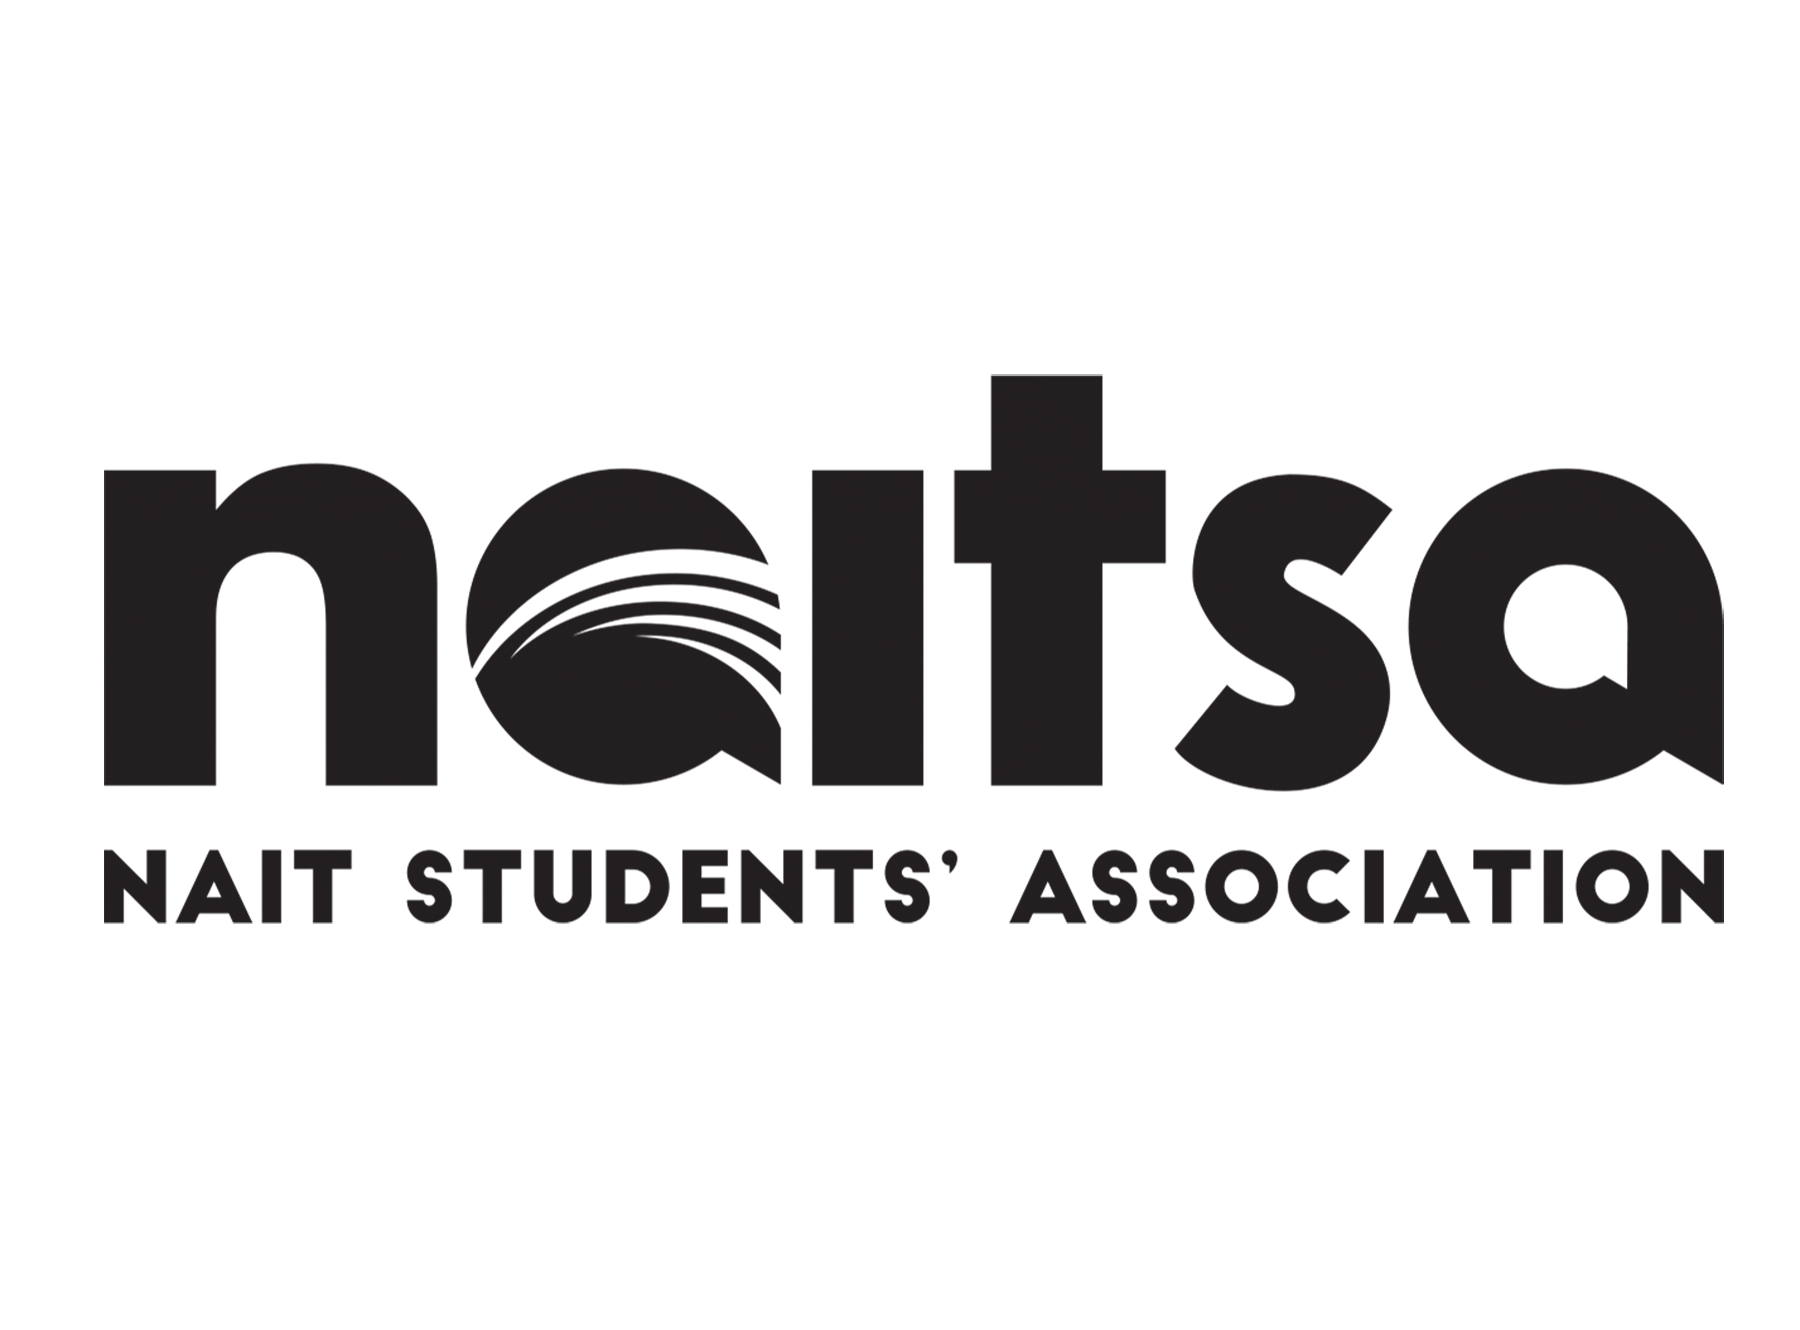 NAIT Student's Association